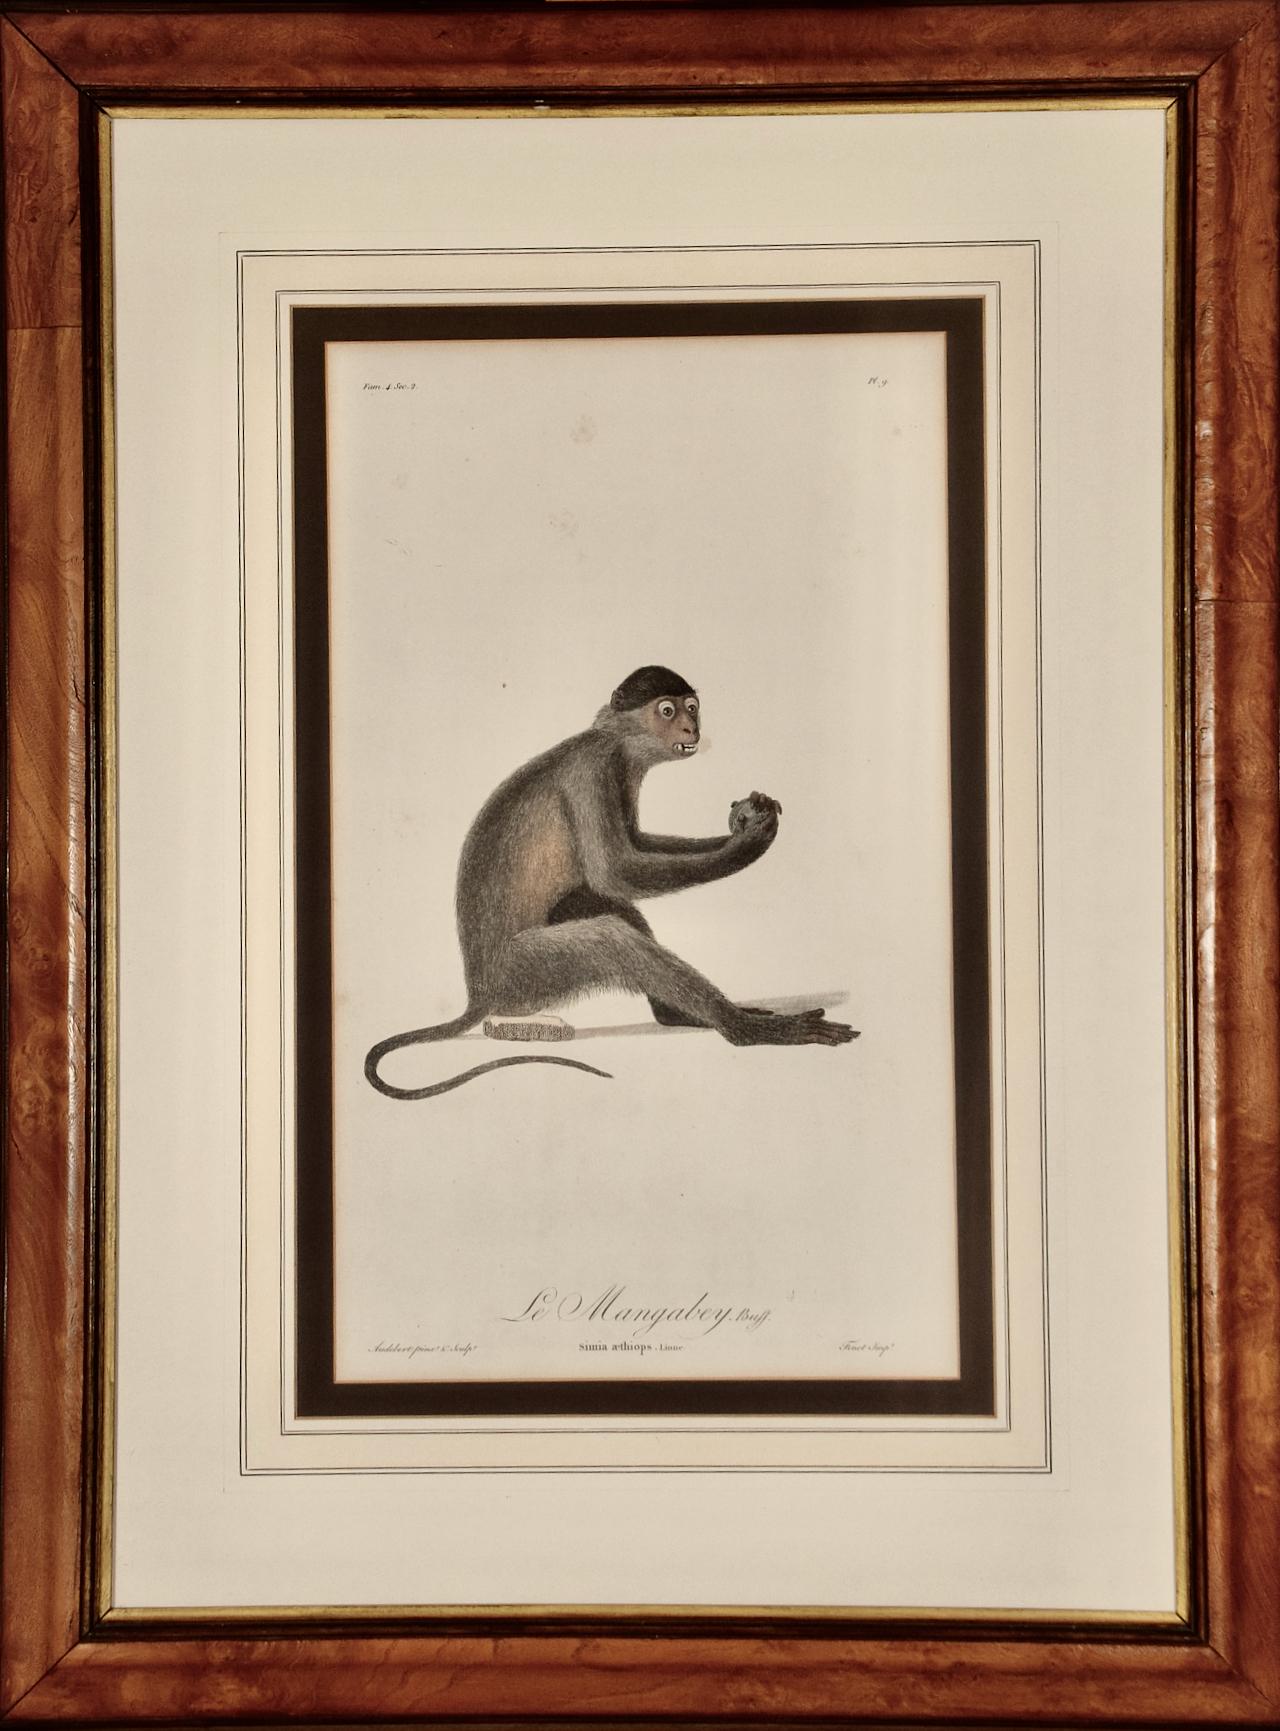  Le Mangabey Monkey: Framed Audebert 18th C. Hand-colored Engraving